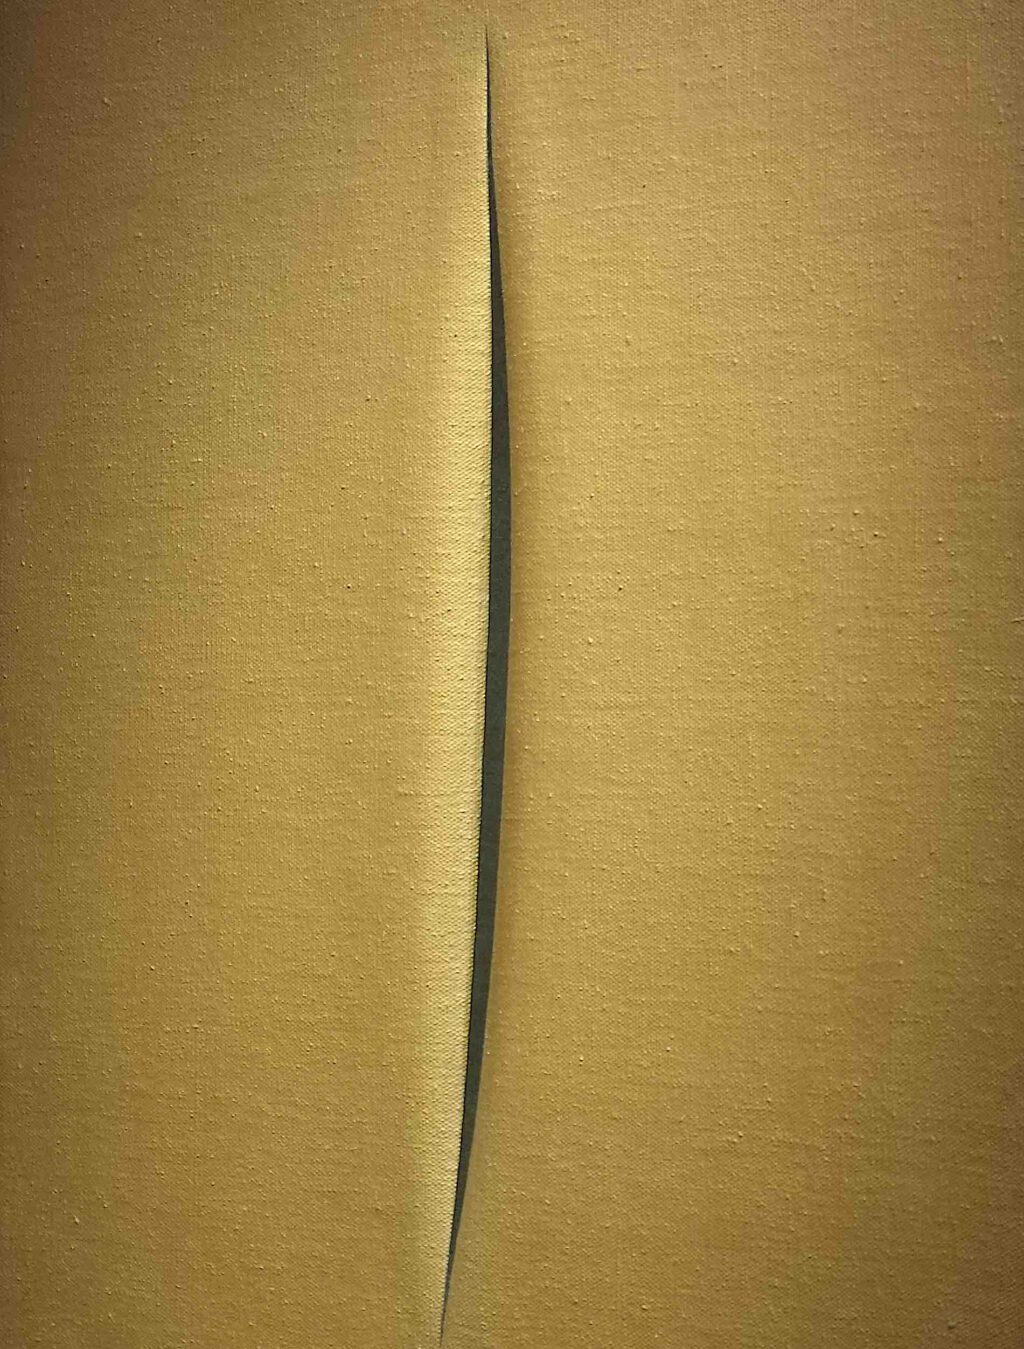 Lucio Fontana Concetto Spaziale, Attesa 1964, Oil on canvas, 73 x 60.3 cm, detail @ LUXEMBOURG + Co., Art Basel 2023